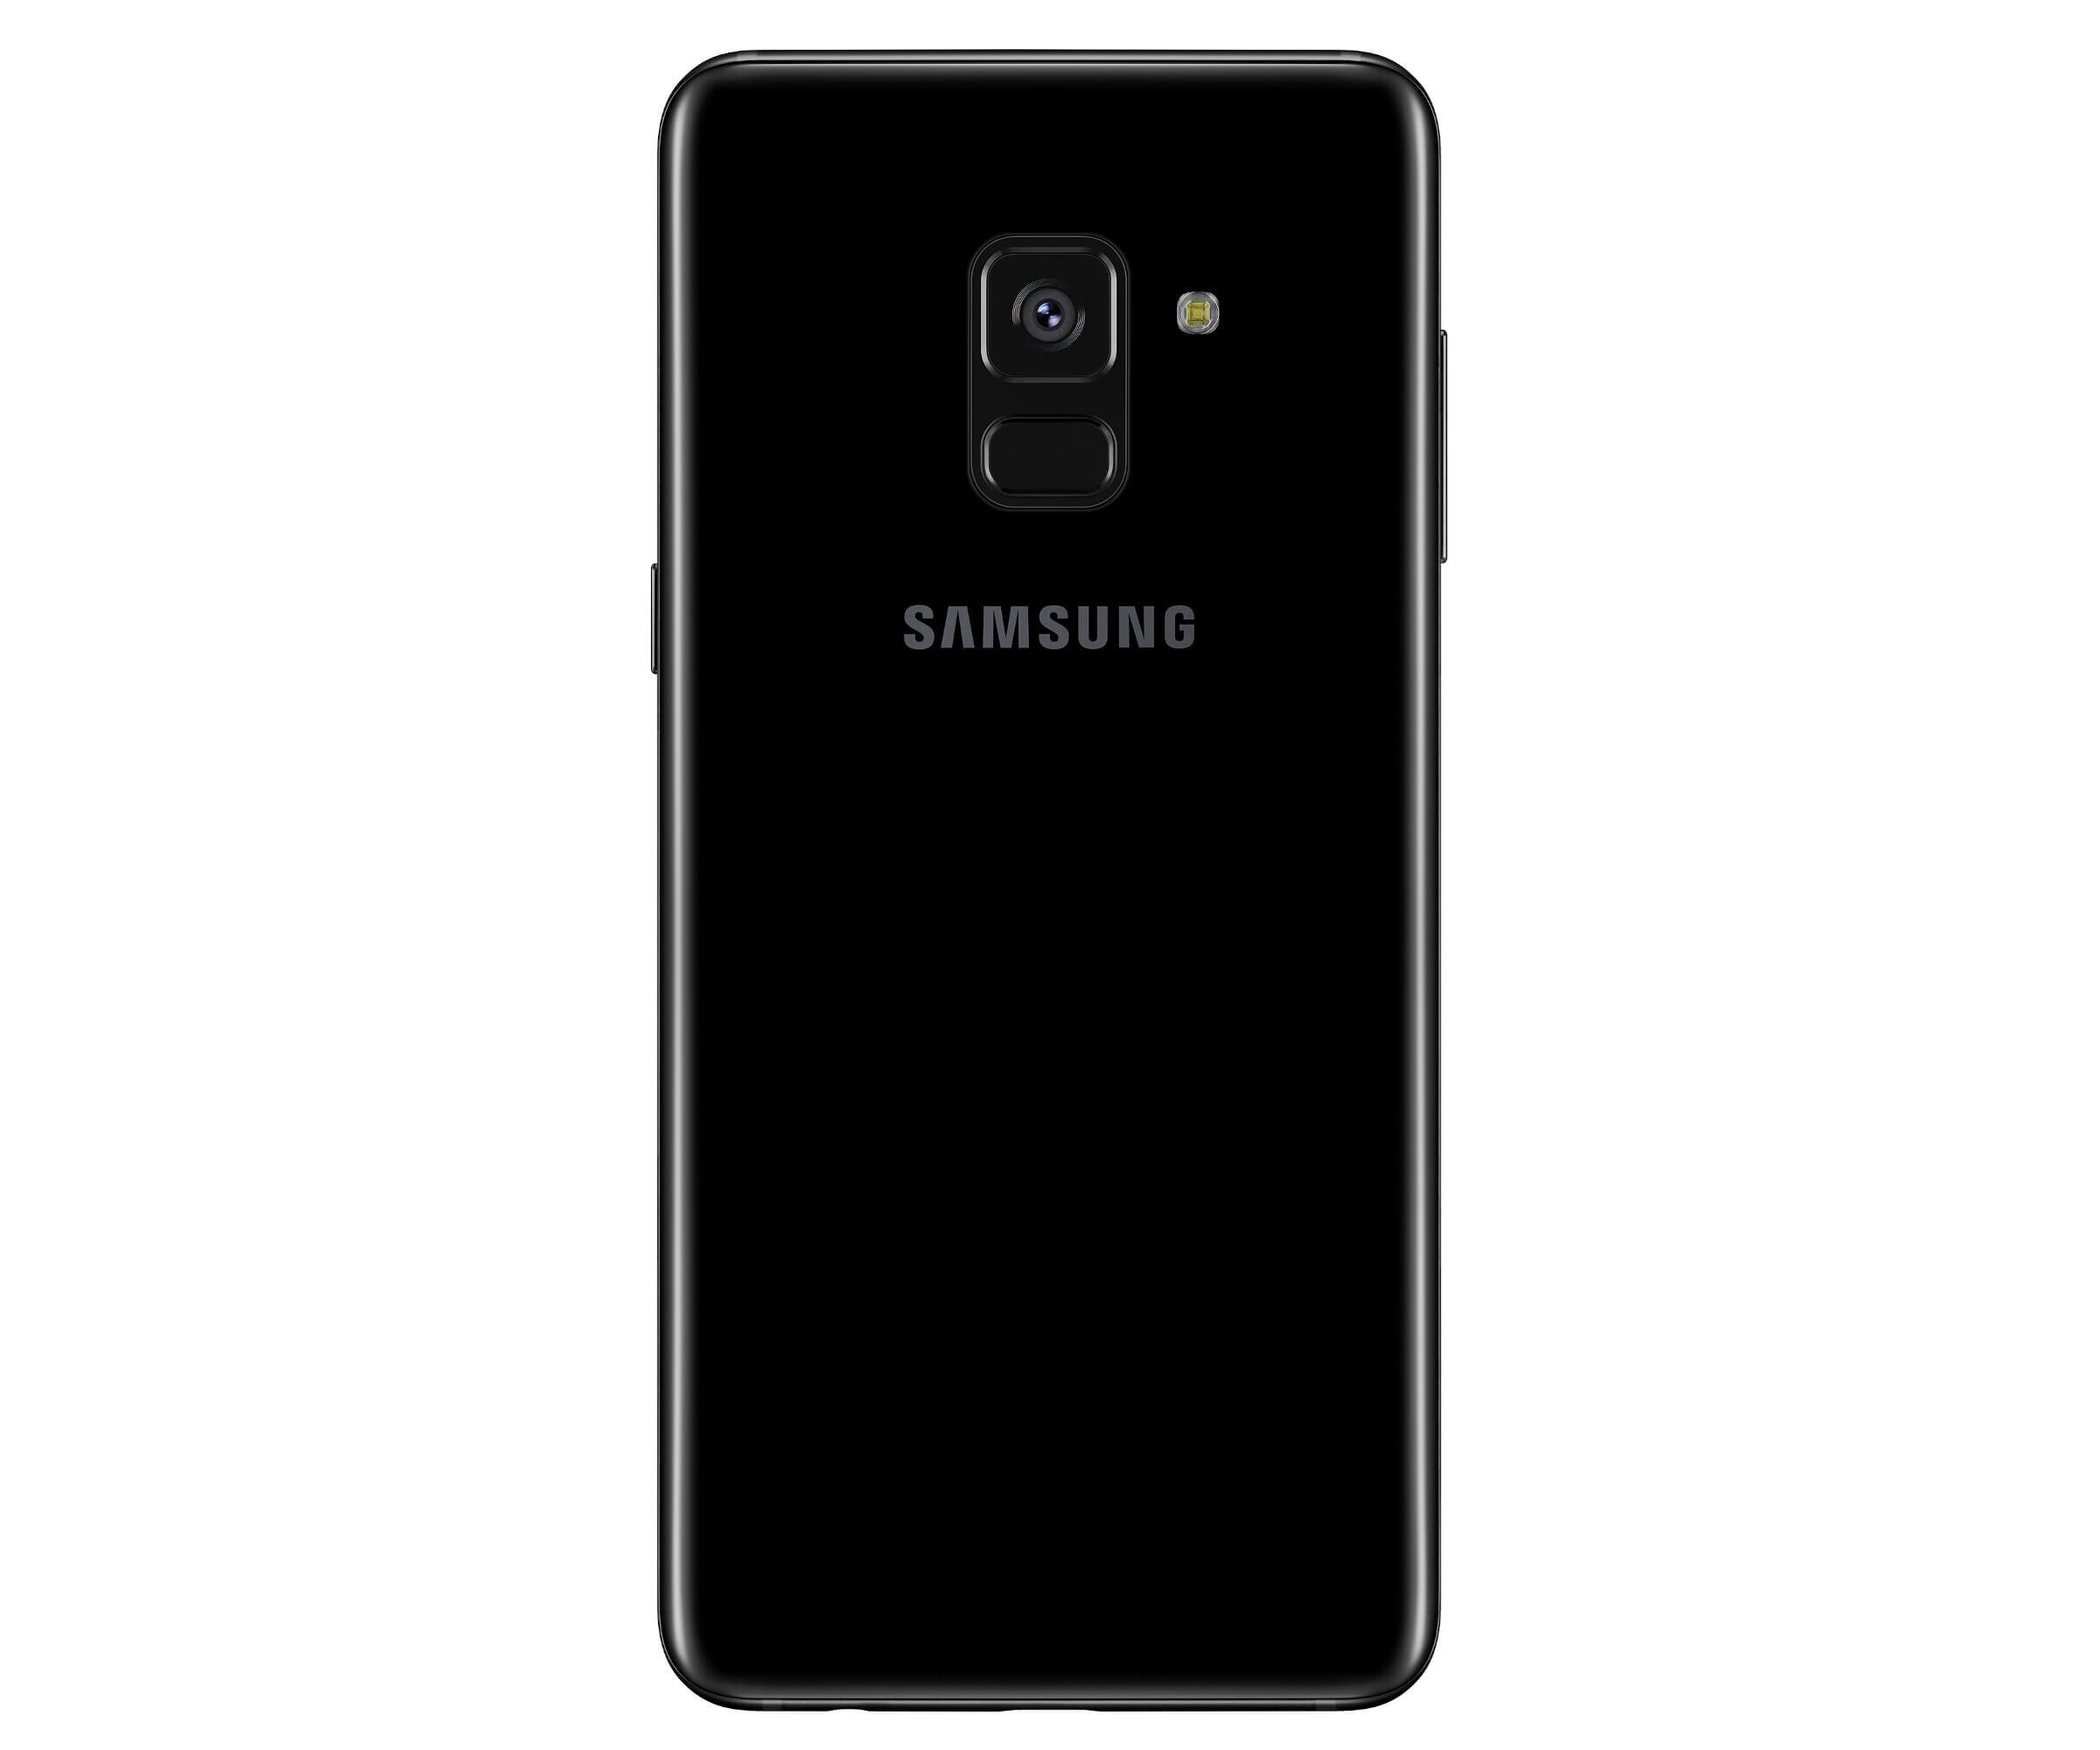 Samsung Galaxy A8 (2018) Enterprise Edition - Smartphone - Dual-SIM - 4G LTE - 32 GB - microSDHC slot, - microSDXC slot - GSM - 5.6